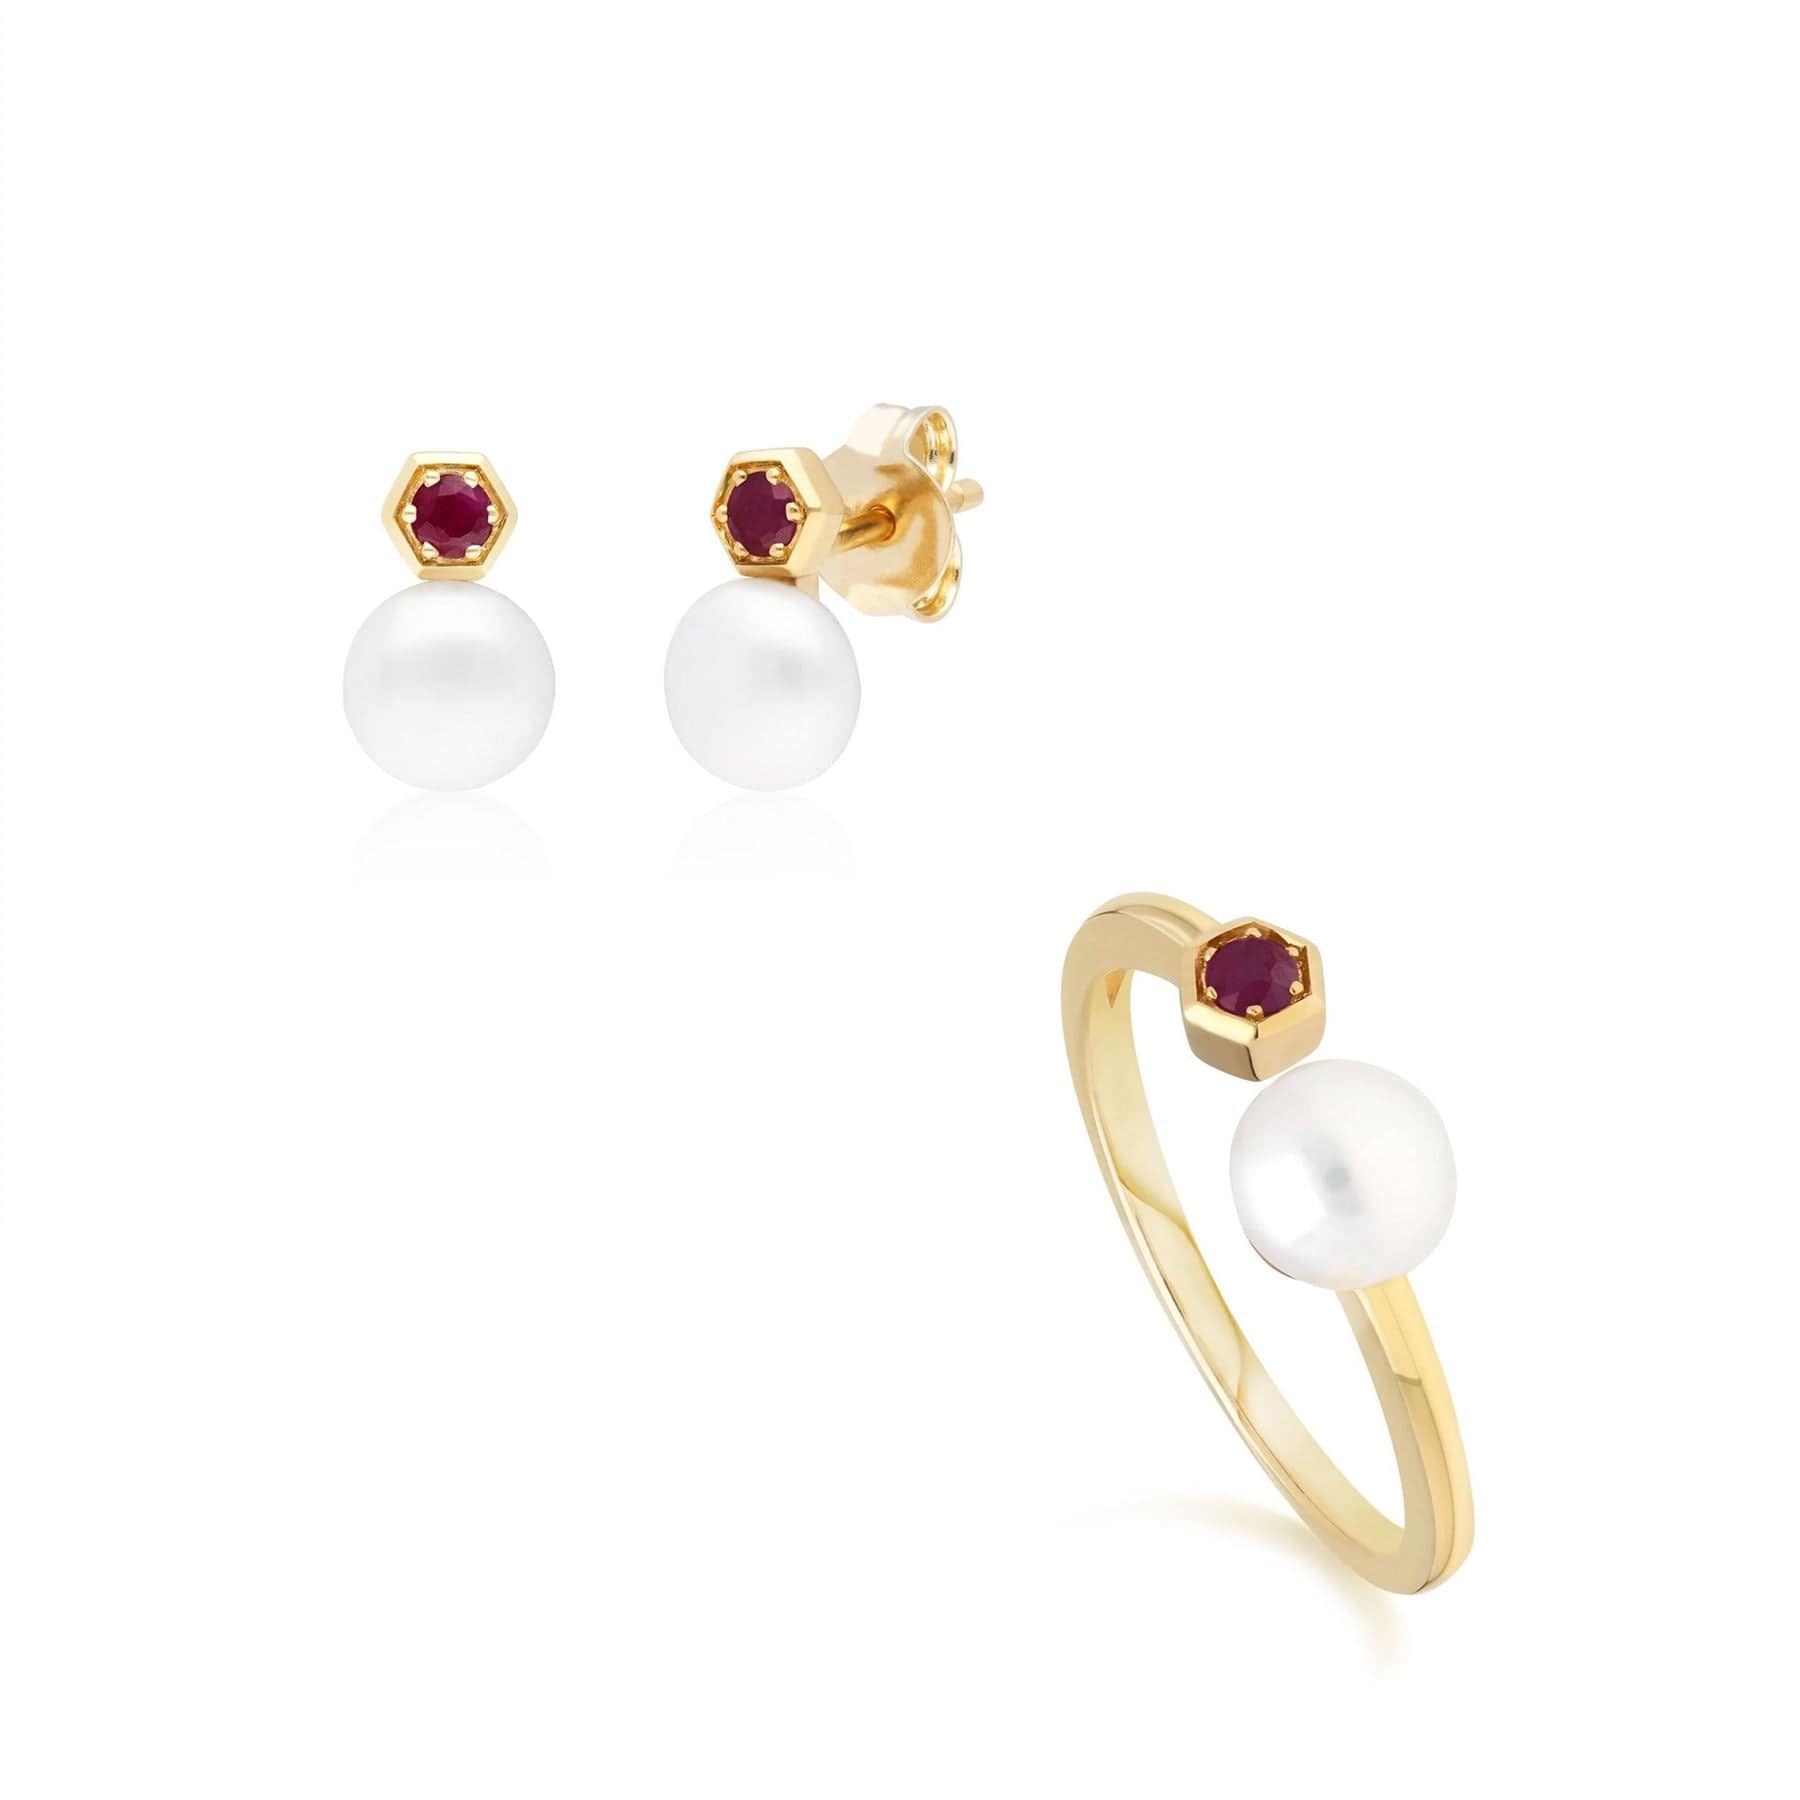 Modern Pearl & Ruby Earring & Ring Set in 9ct Gold - Gemondo